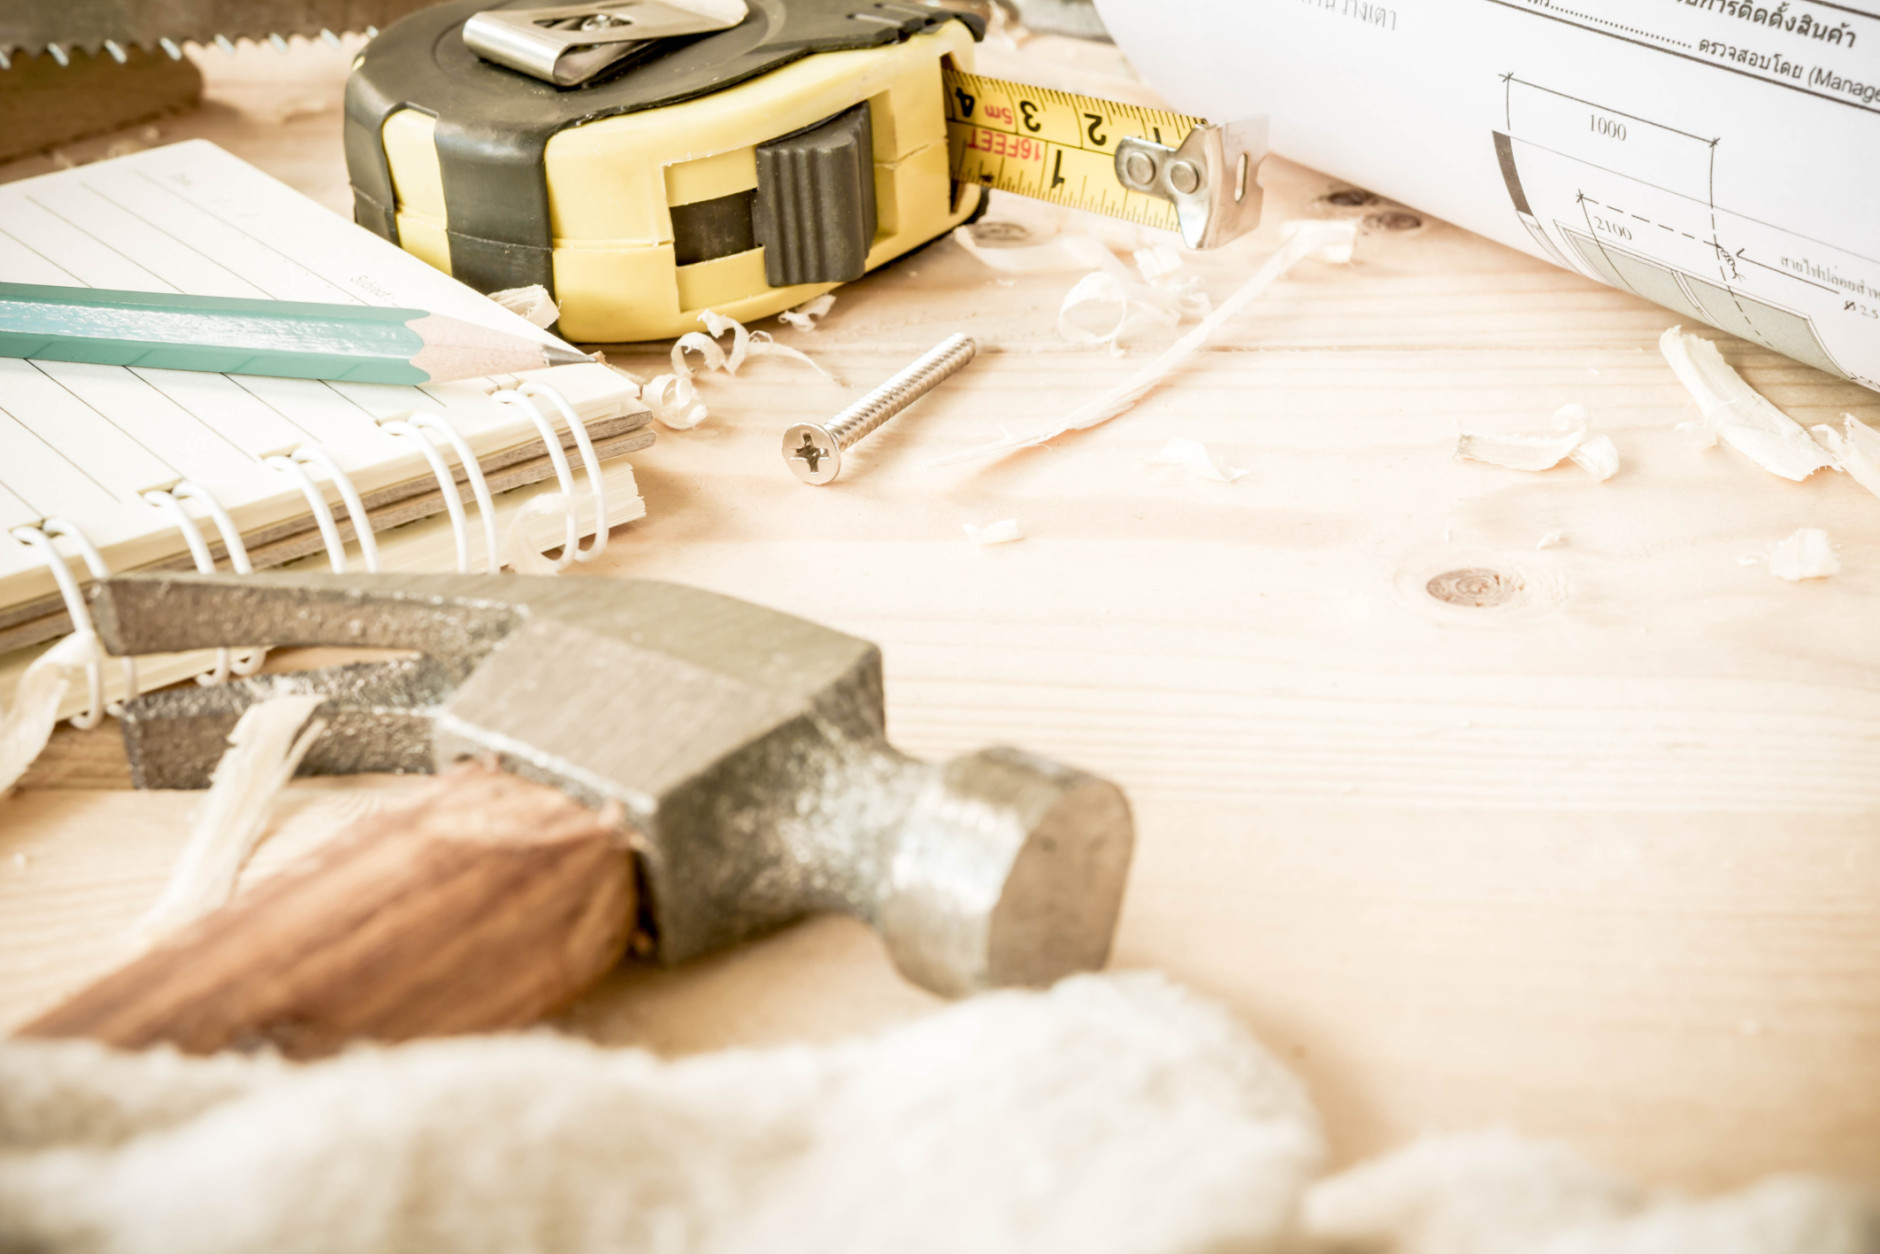 carpenter tools,hammer,meter,nails,shavings